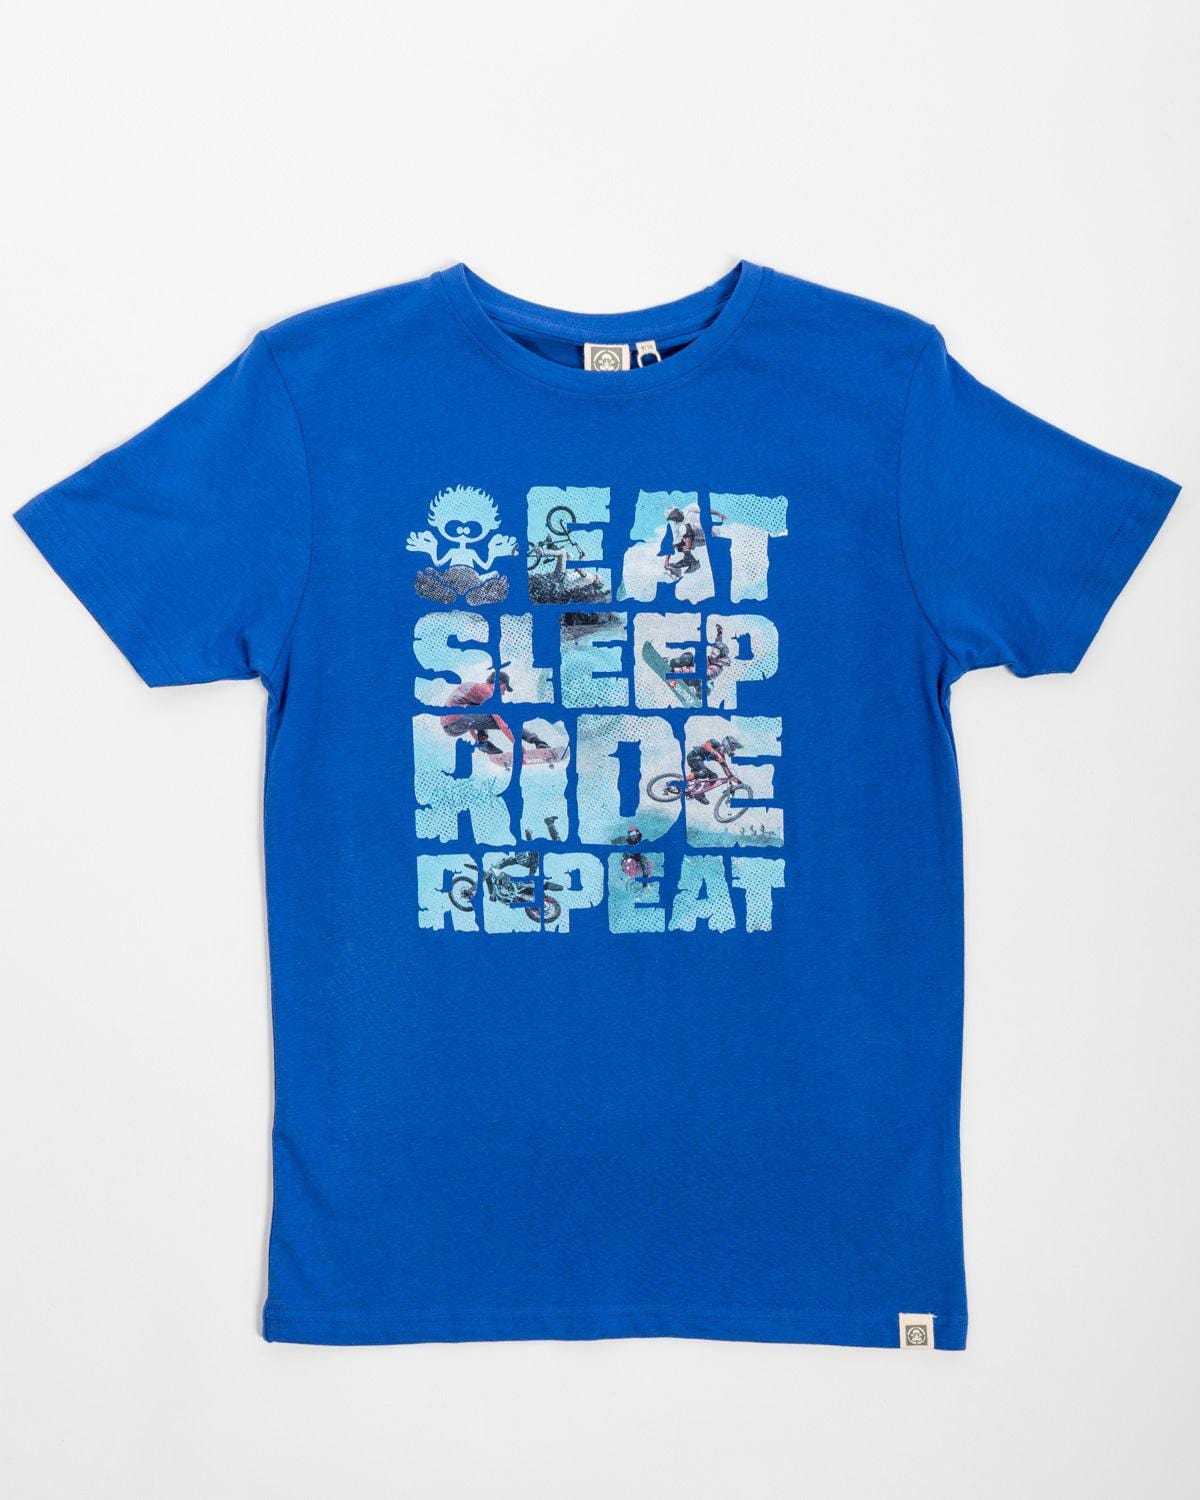 Repeater - Boys Short Sleeve T-shirt - Blue